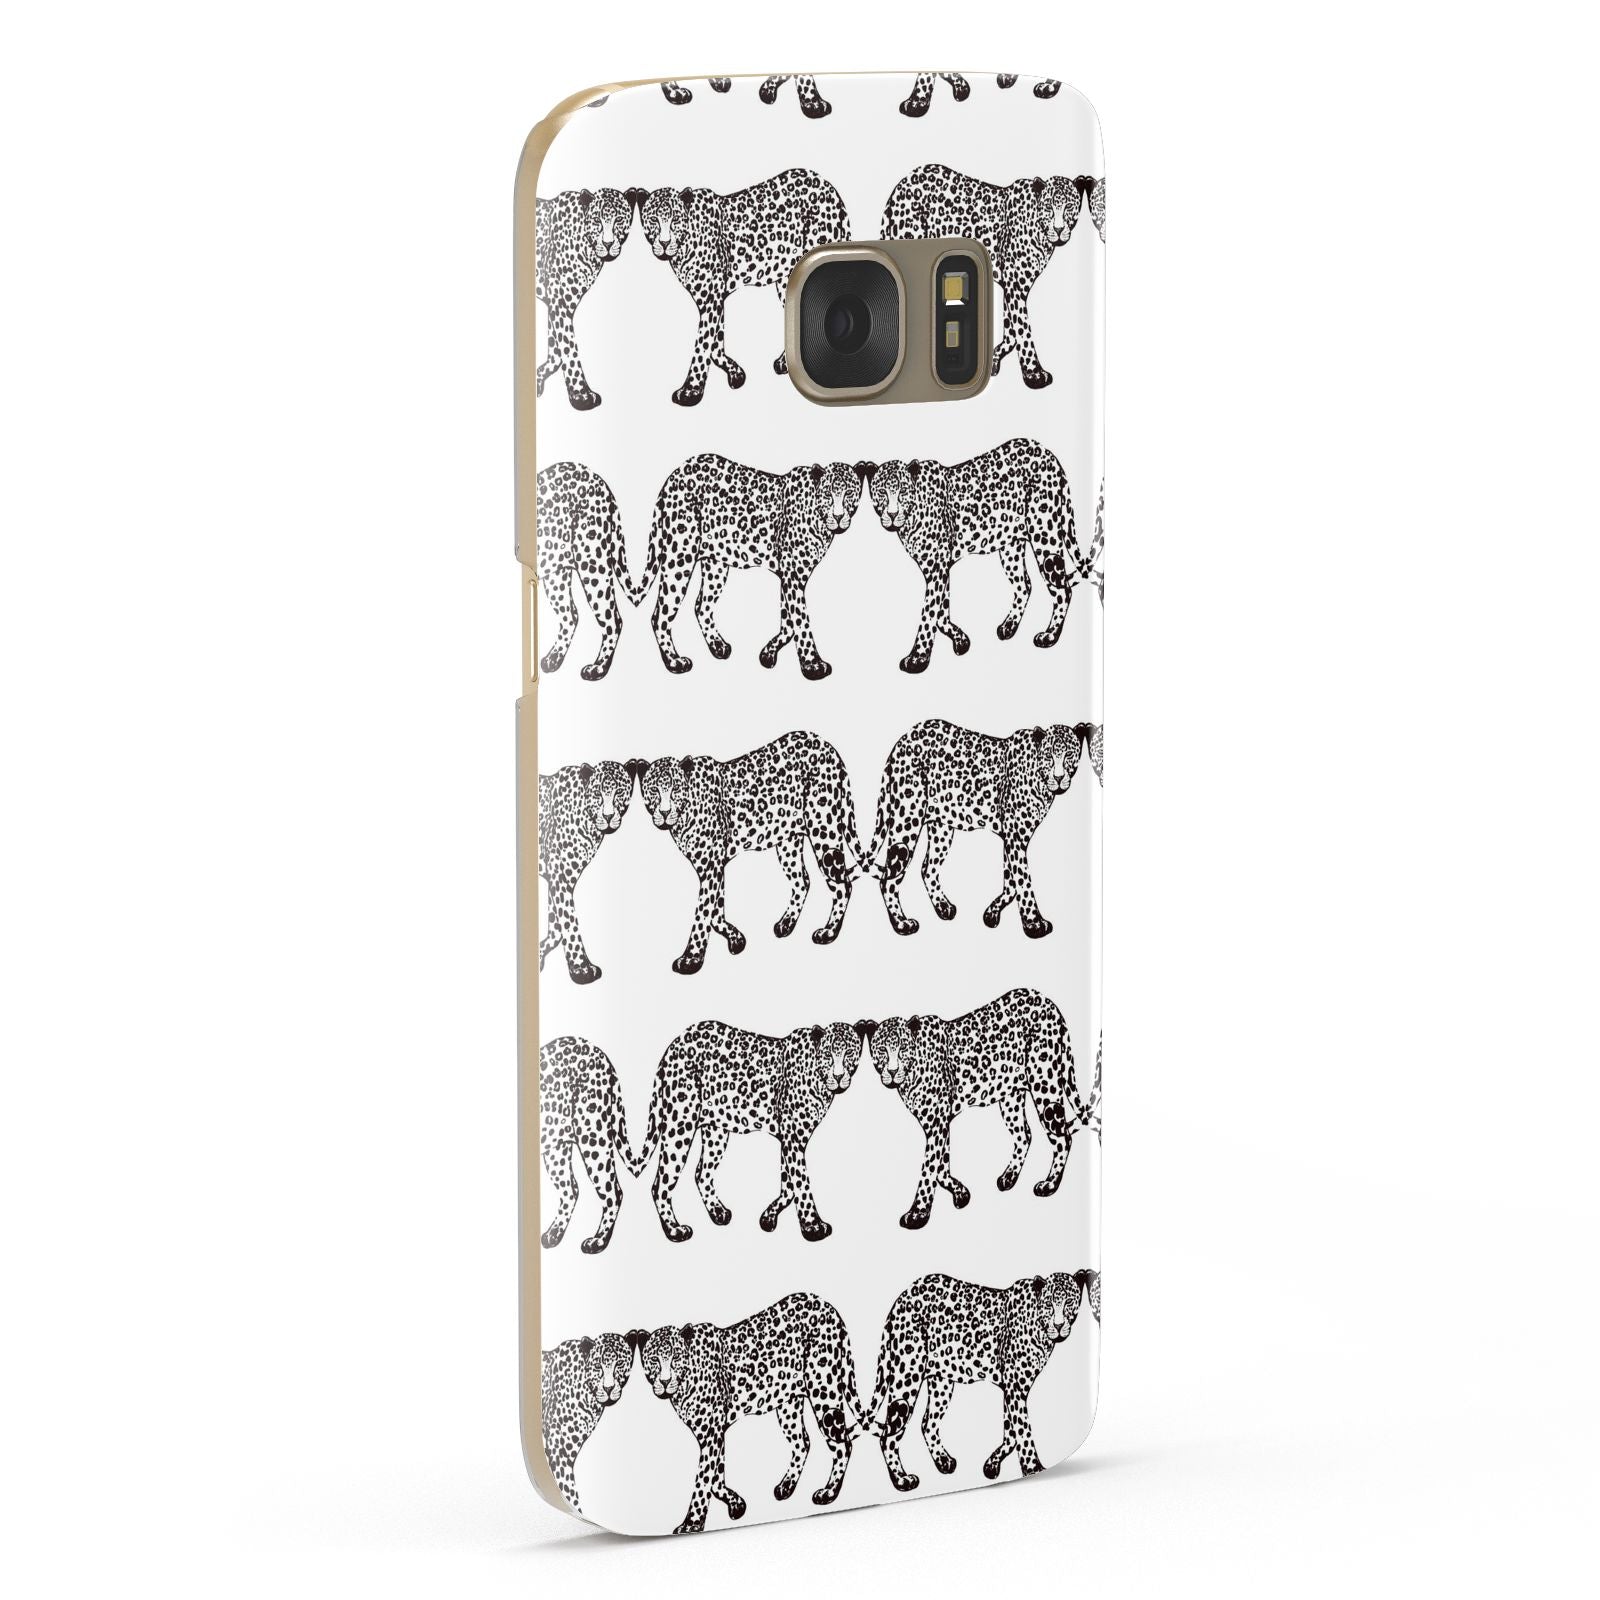 Monochrome Mirrored Leopard Print Samsung Galaxy Case Fourty Five Degrees